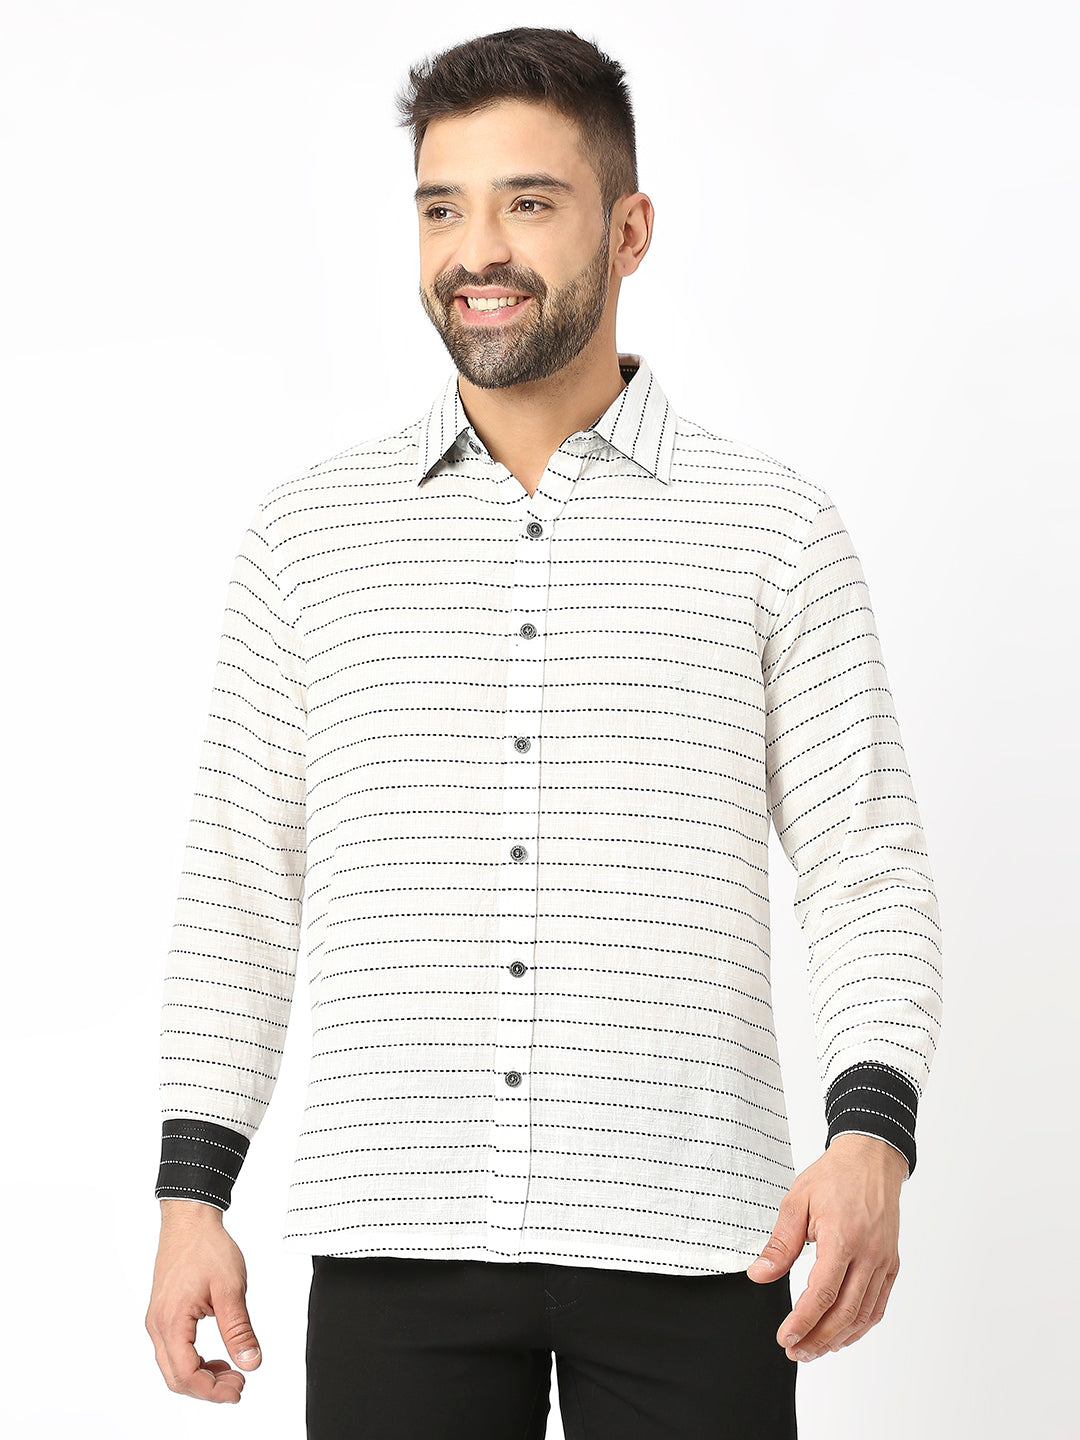 BLAMBLACK Men's Embroidered Full Sleeves Regular fit Spread Collar Shirt